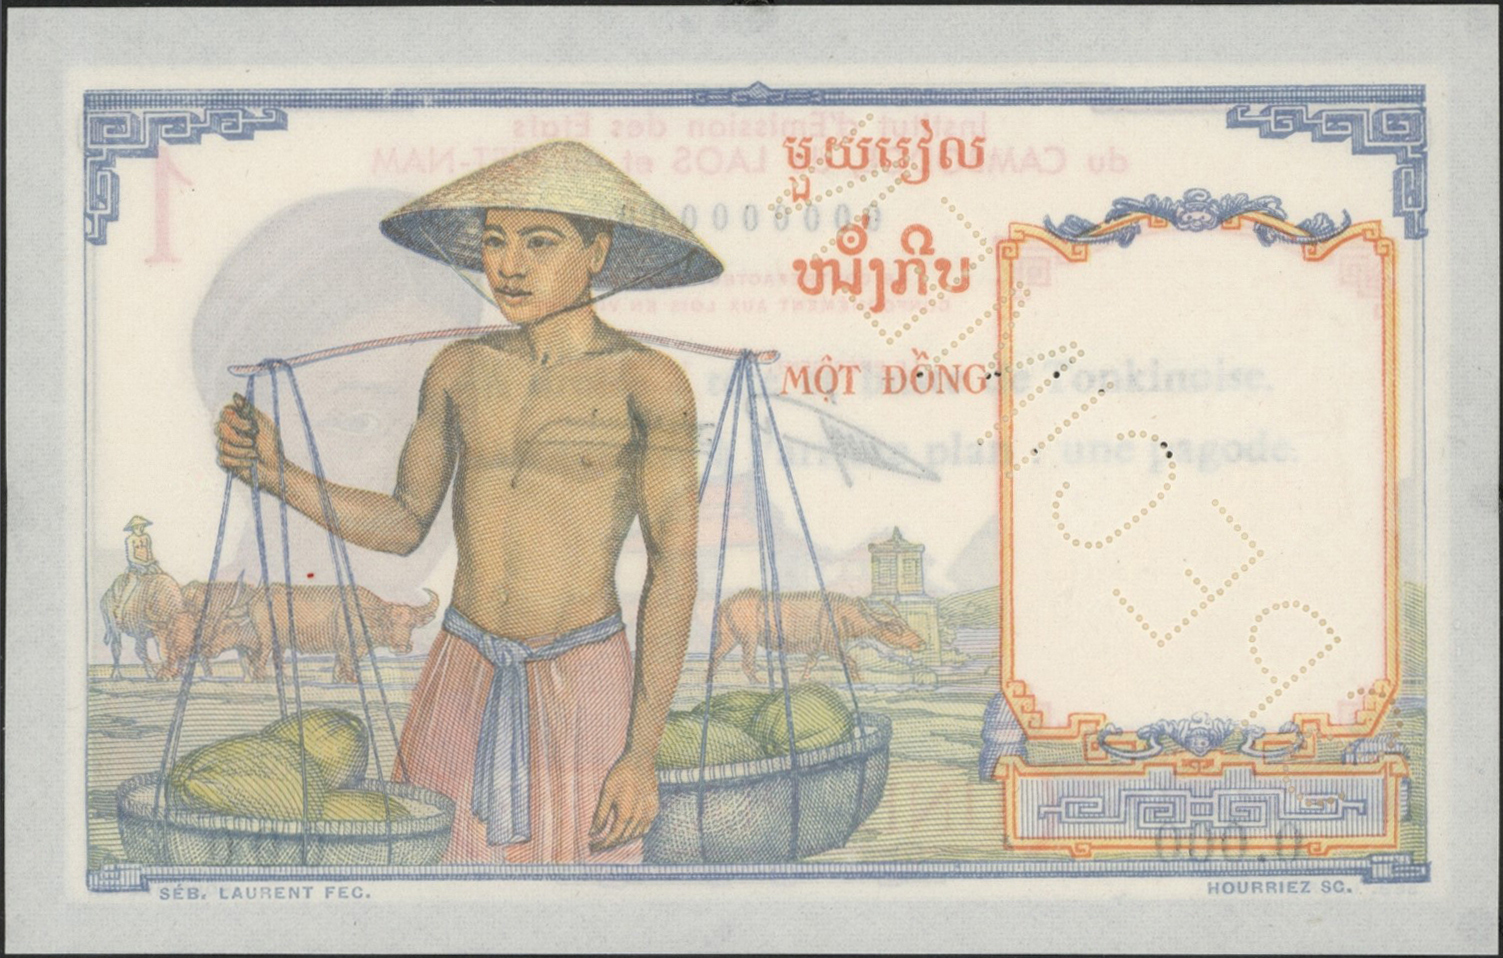 00857 French Indochina / Französisch Indochina: Rare official presentation booklet from the "Institut d'Emission Des Eta